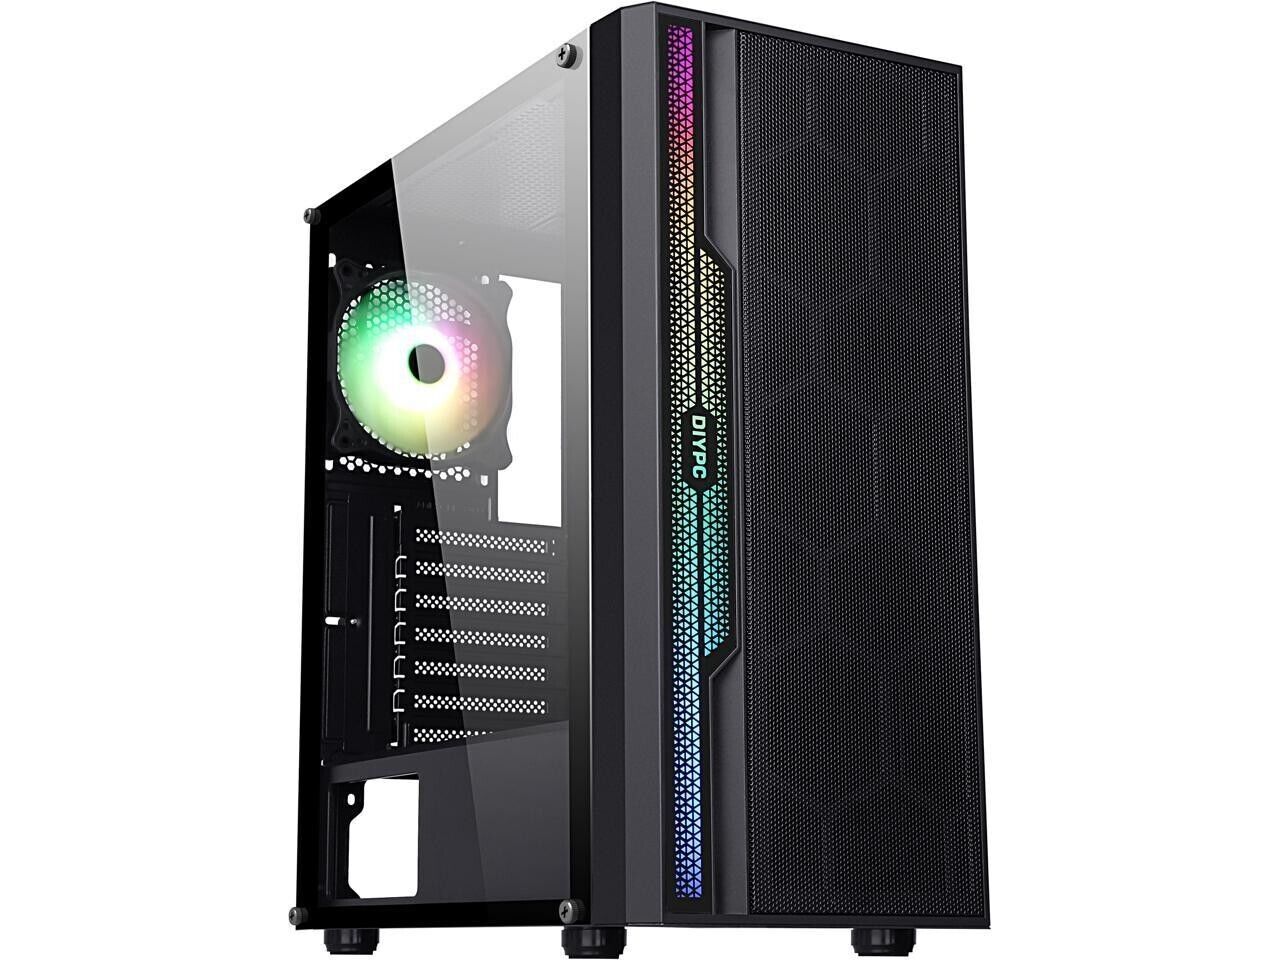 Primary image for Liquid Cooled Gaming Computer, Desktop PC, Ryzen 5600G, 240GB SSD, 8 GB RAM, RGB